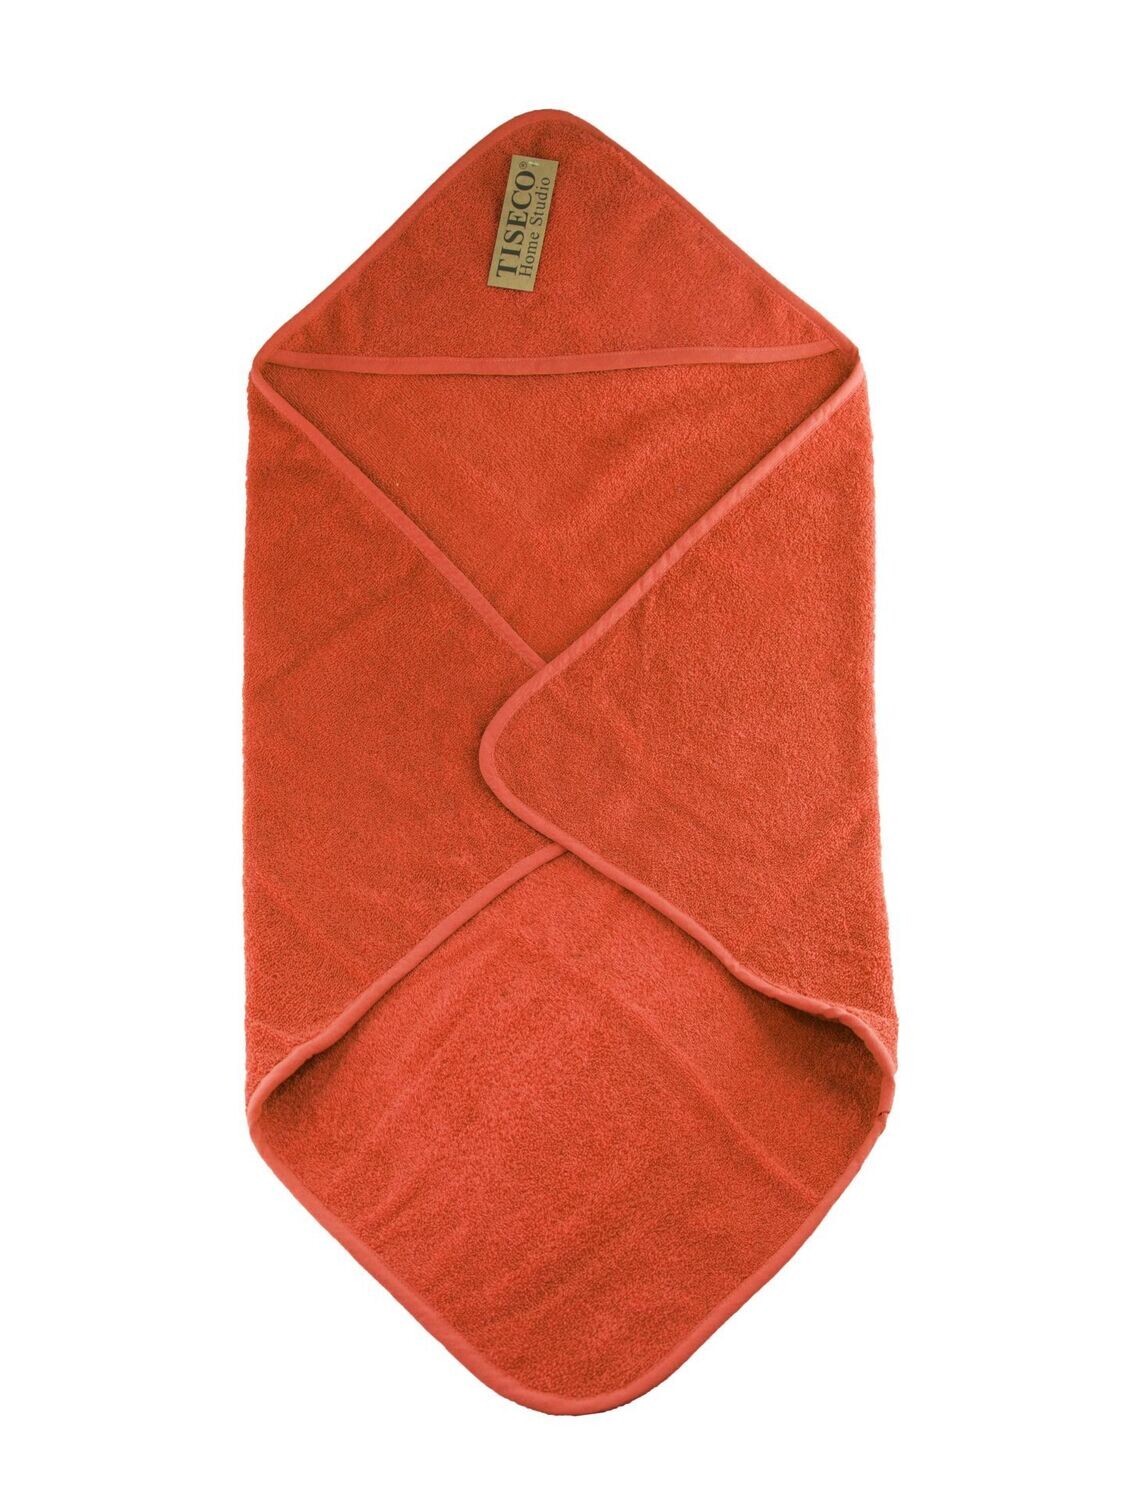 Asciugamano Bambino 75x75 cm Rosso - Tirolix